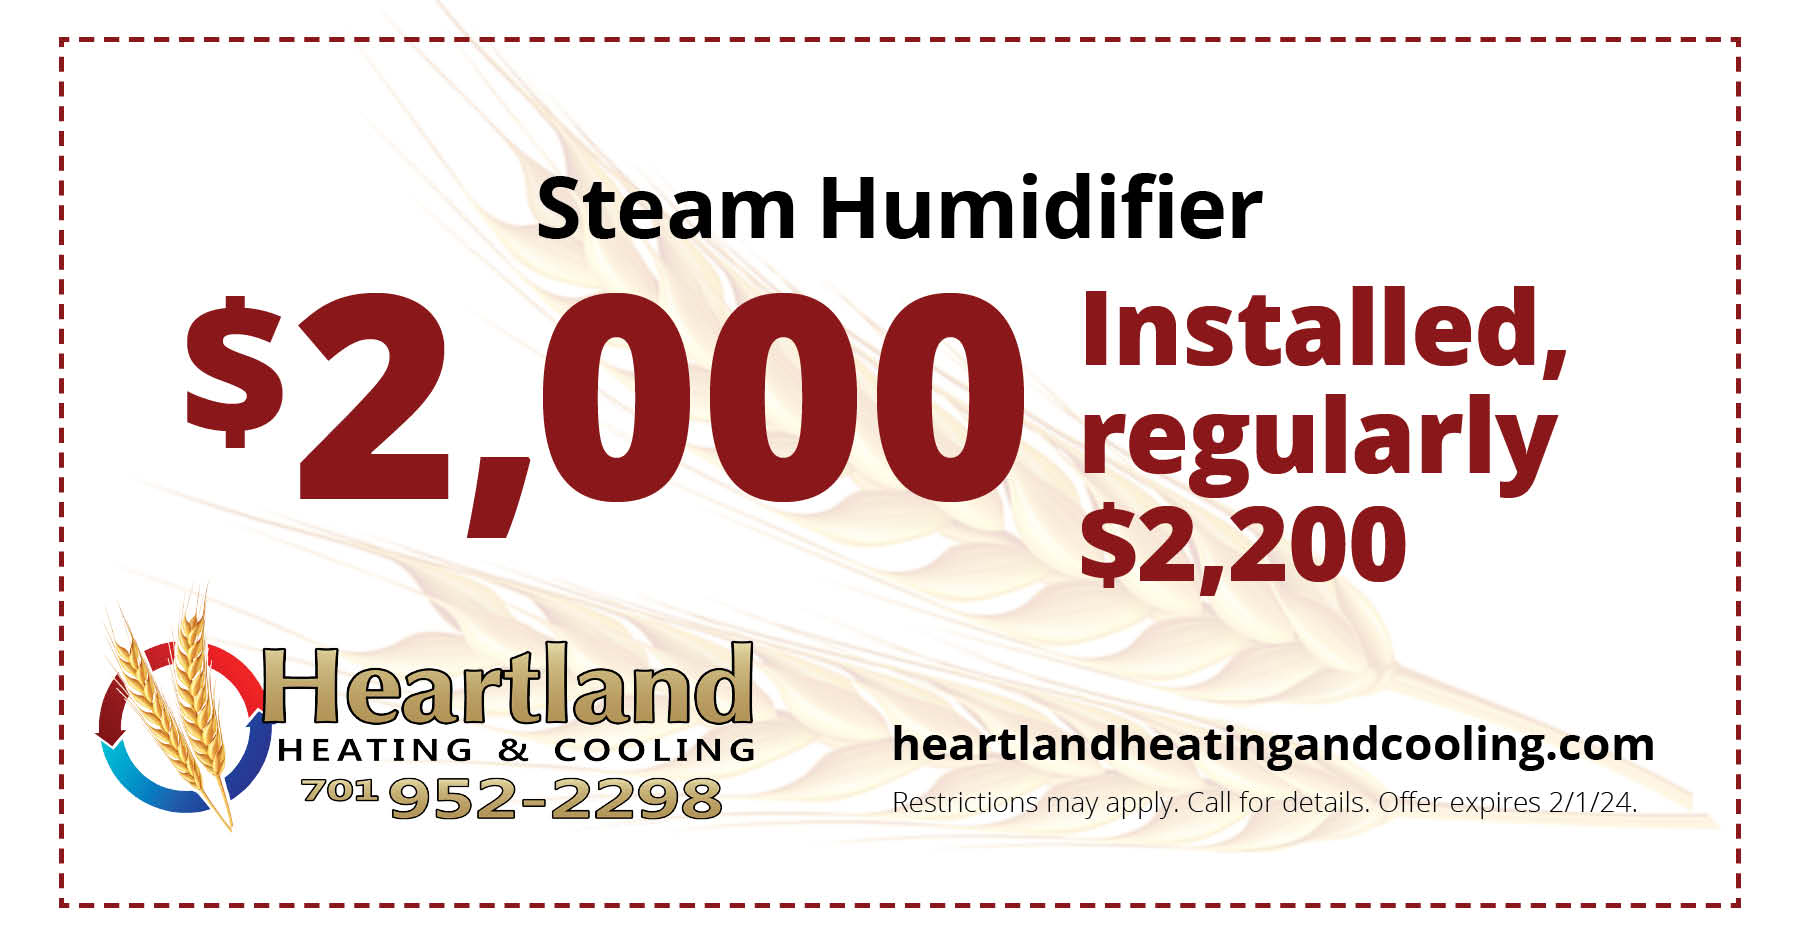 00 steam humidifier